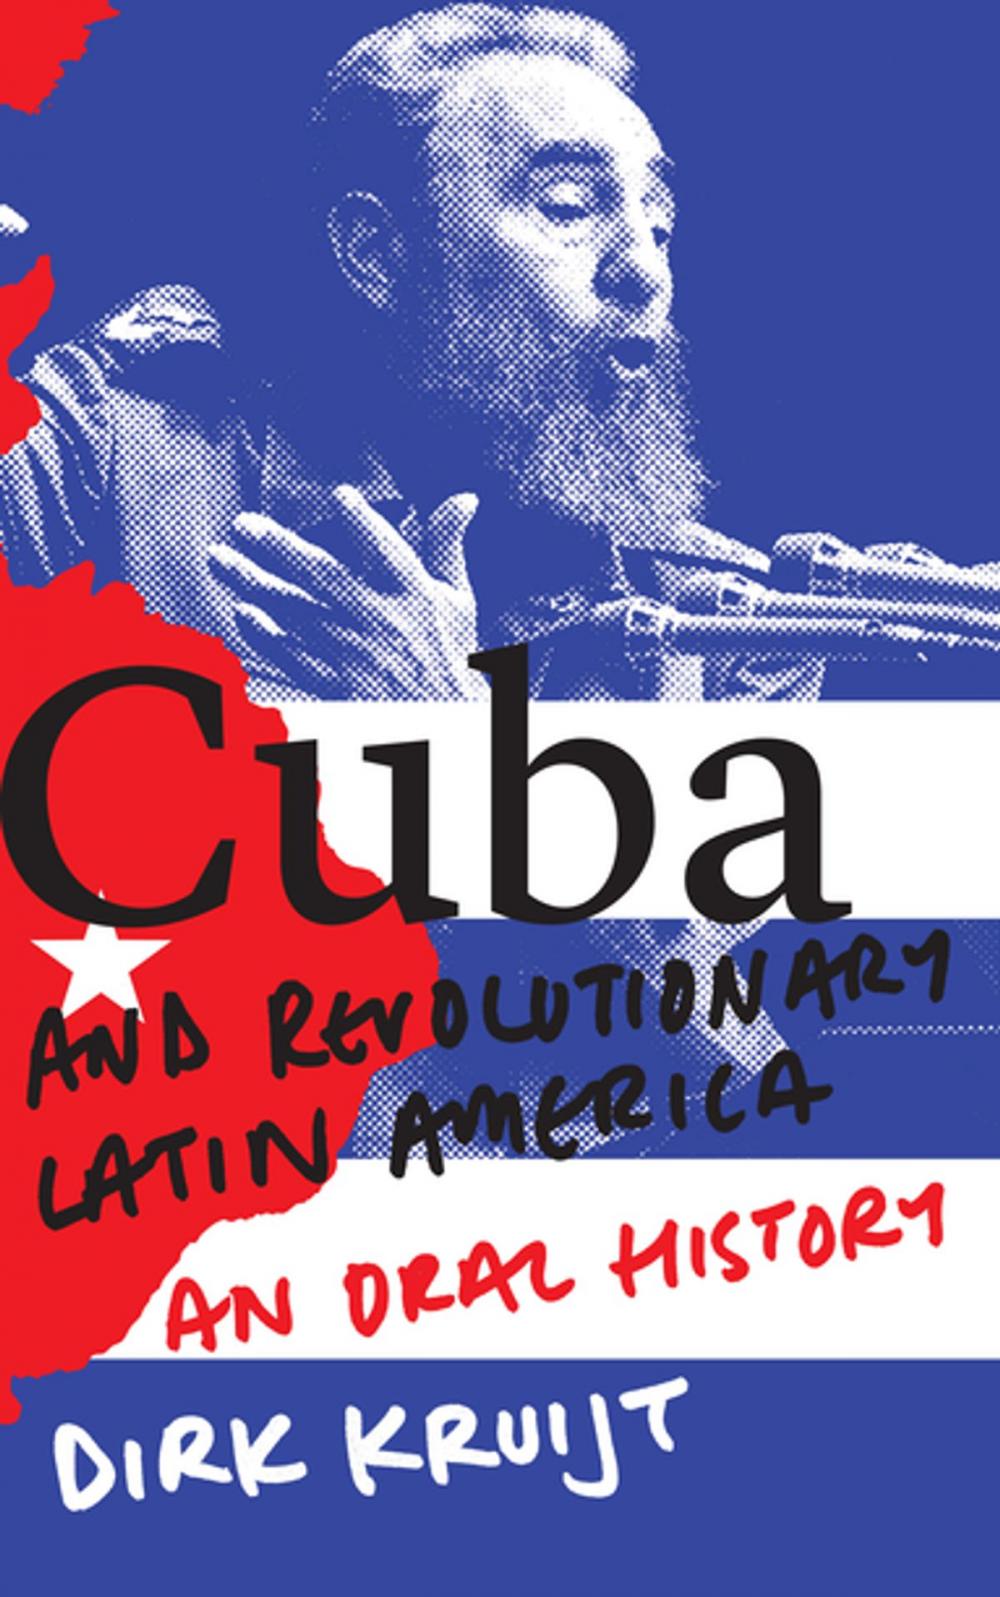 Big bigCover of Cuba and Revolutionary Latin America